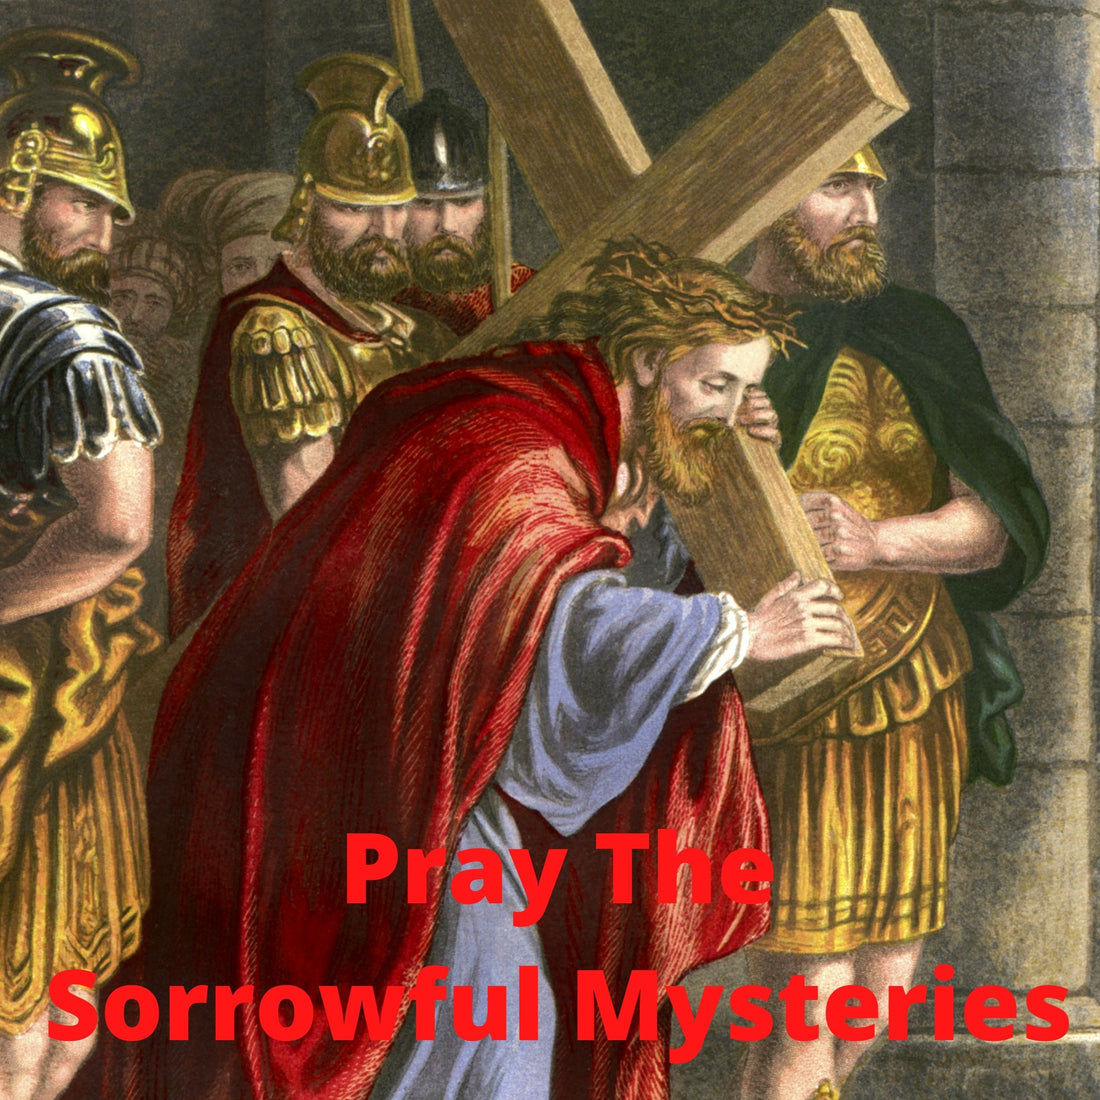 Pray the Sorrowful Mysteries